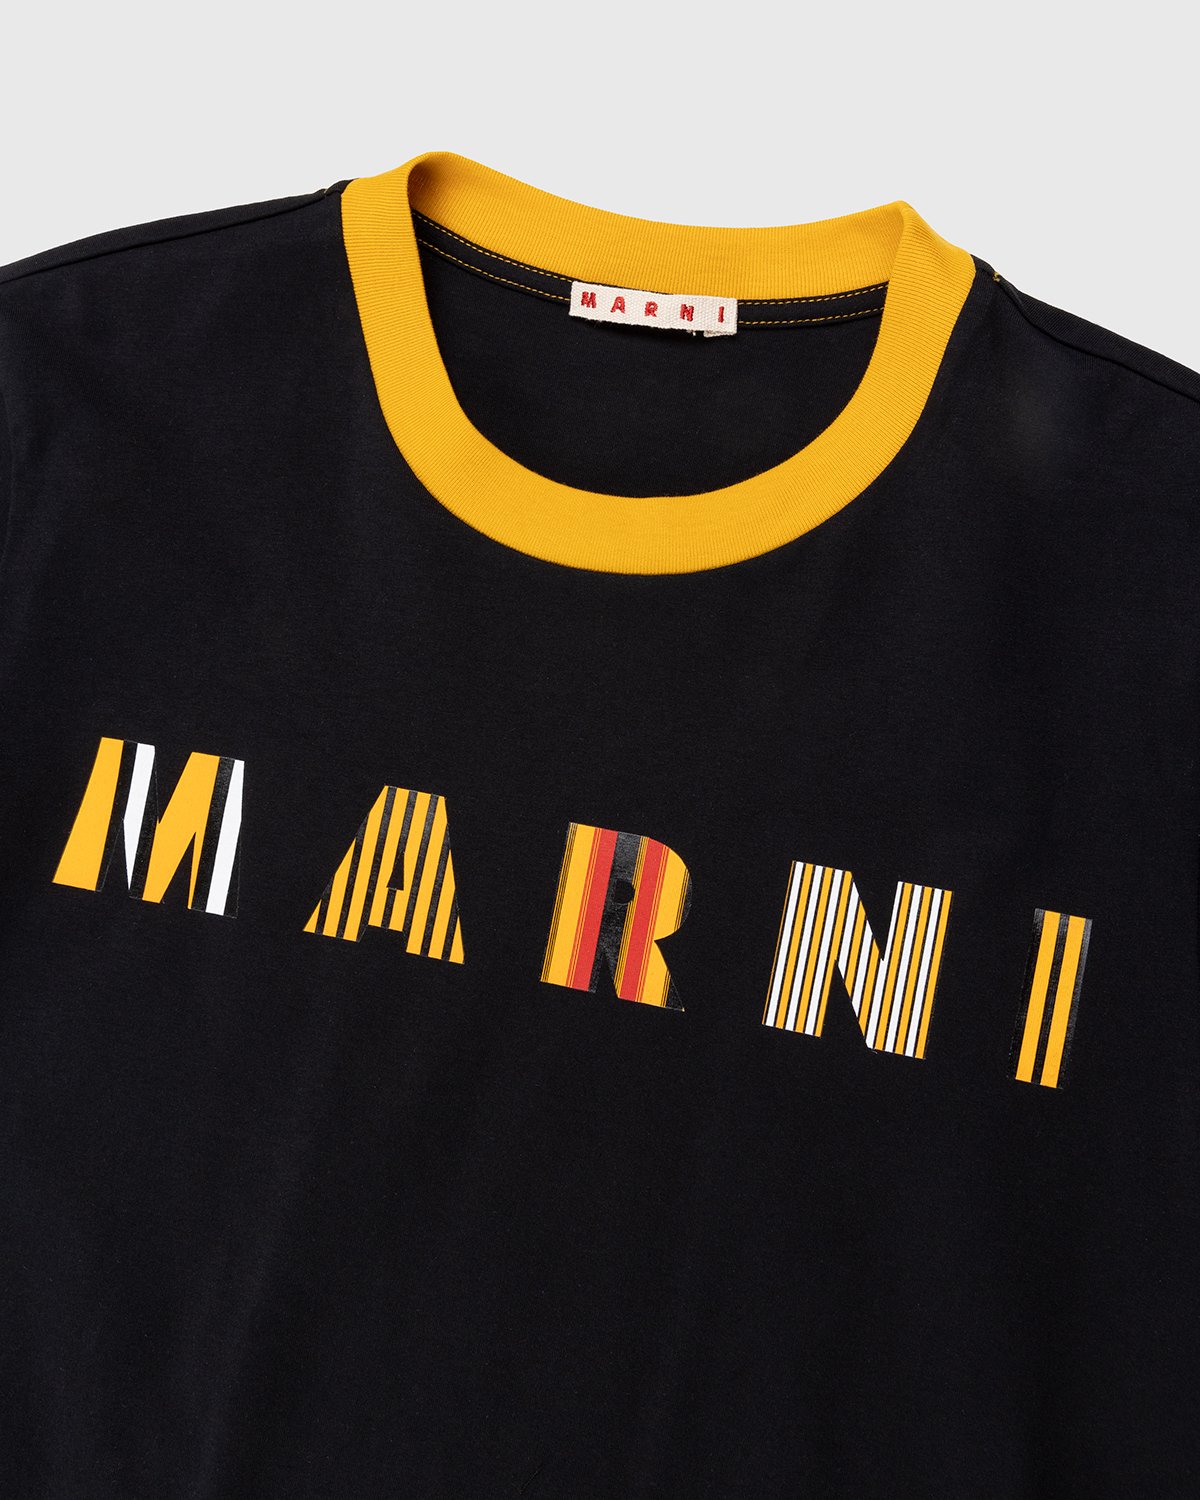 Marni - Stripe Logo Bio Jersey T-Shirt Black/Gold - Clothing - Yellow - Image 4